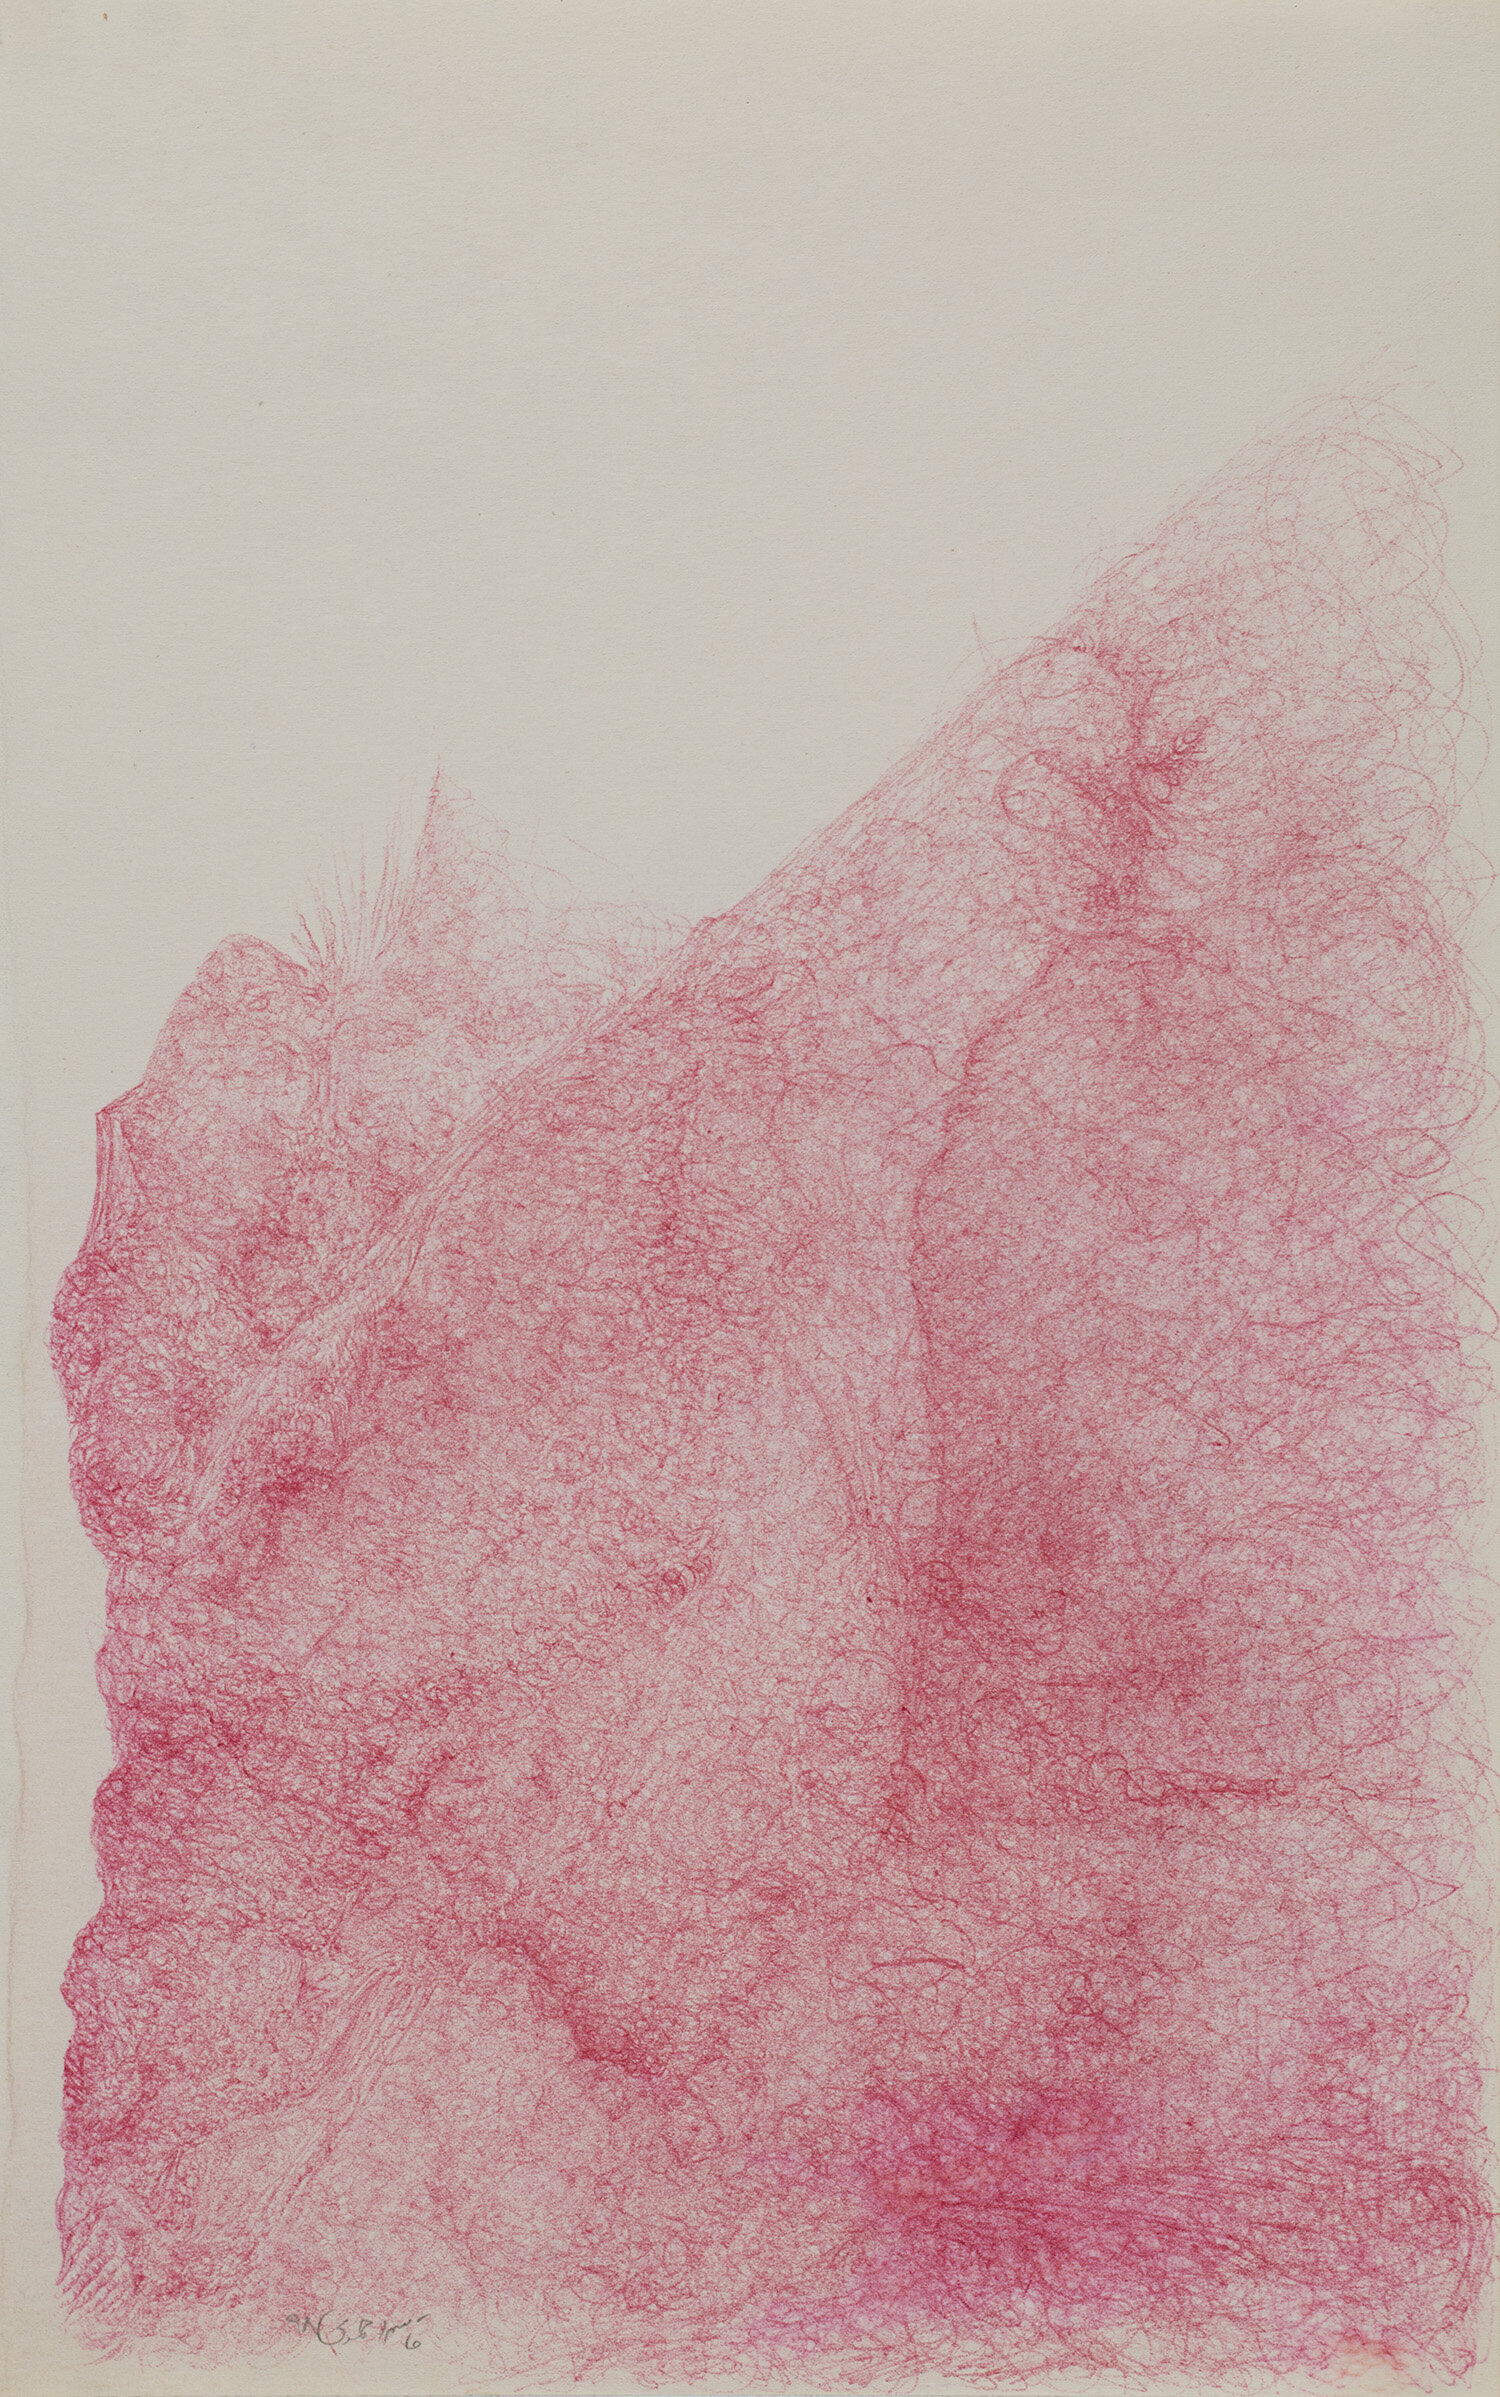   Ghasem Ahmadi     Untitled  , n.d.  Ink on paper  11 x 6.8 inches  27.9 x 17.3 cm  GAh 11 